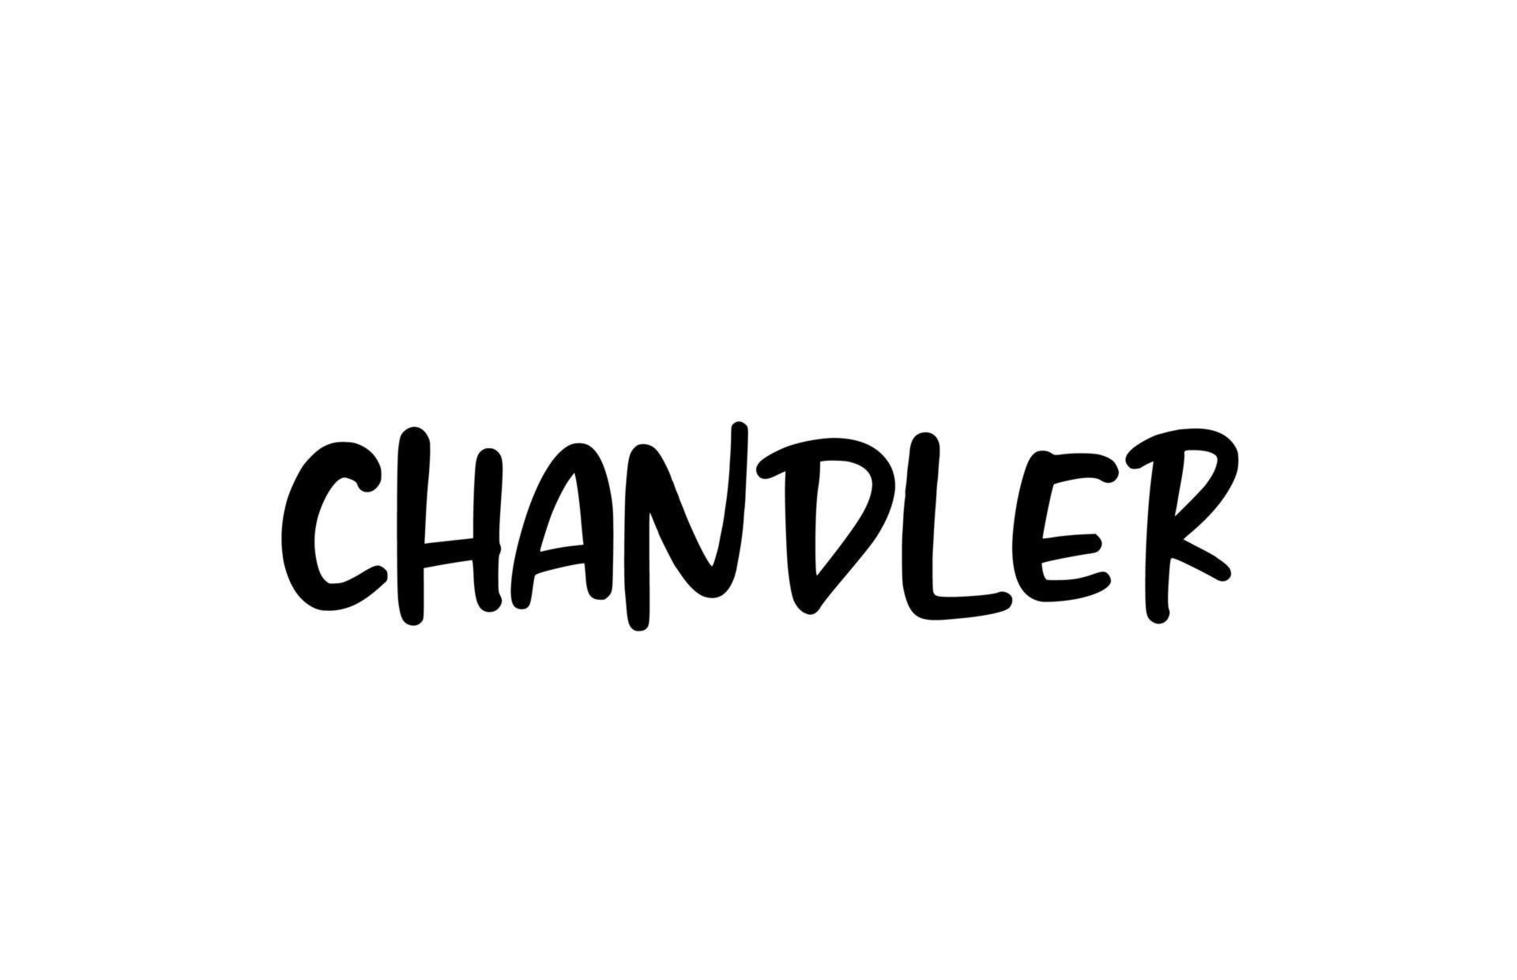 chandler stad handgeschreven typografie word tekst hand belettering. moderne kalligrafie tekst. zwarte kleur vector